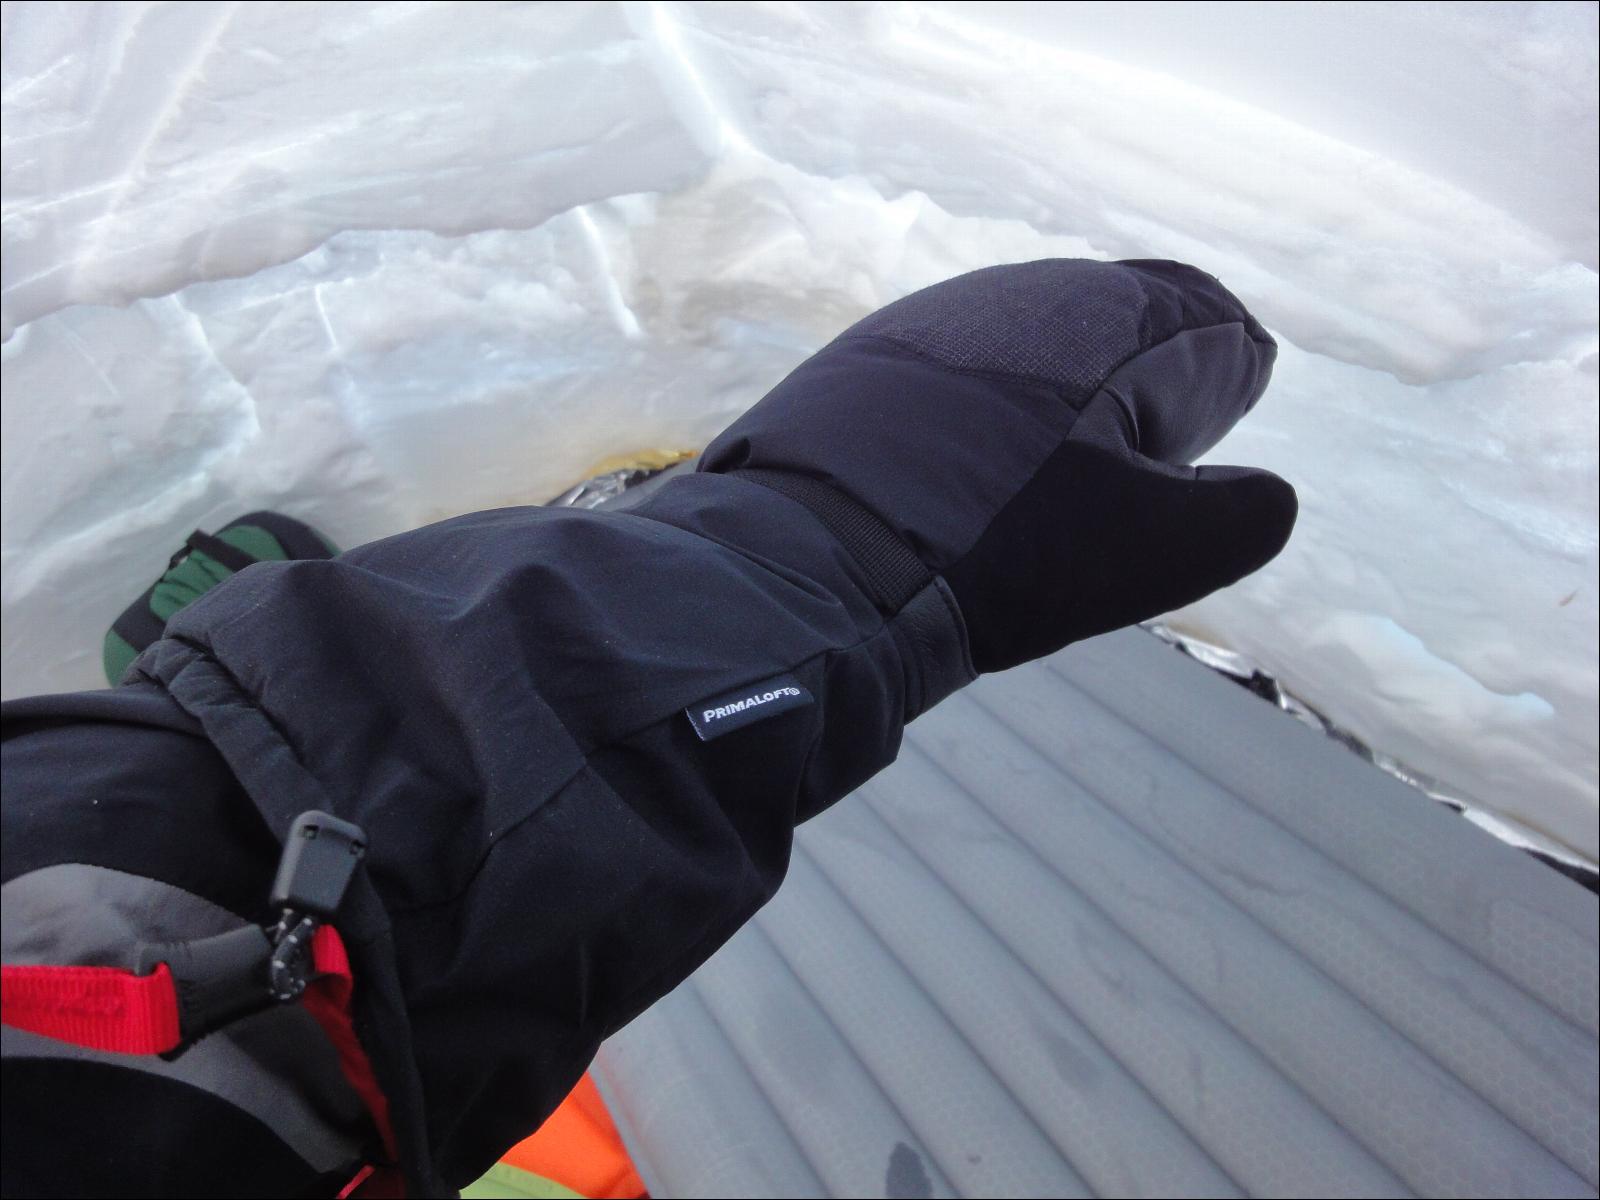 north face himalayan gloves